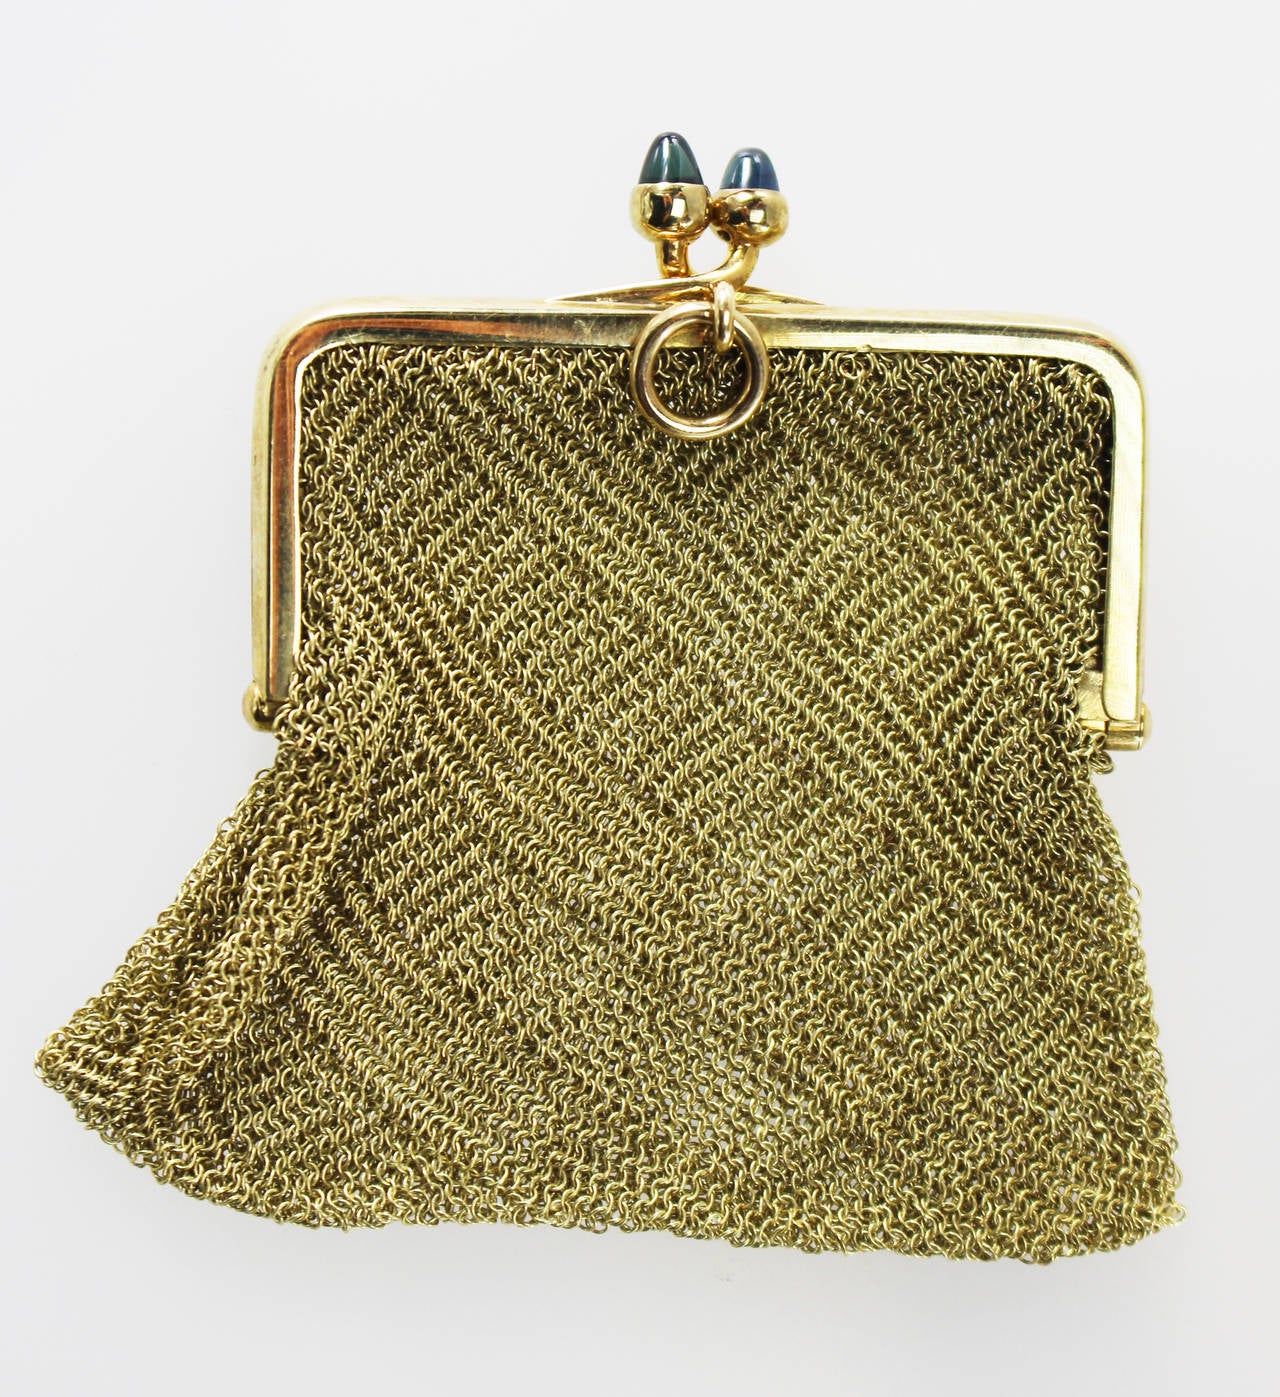 Antique gold mesh purse weighing 30.4 grams.